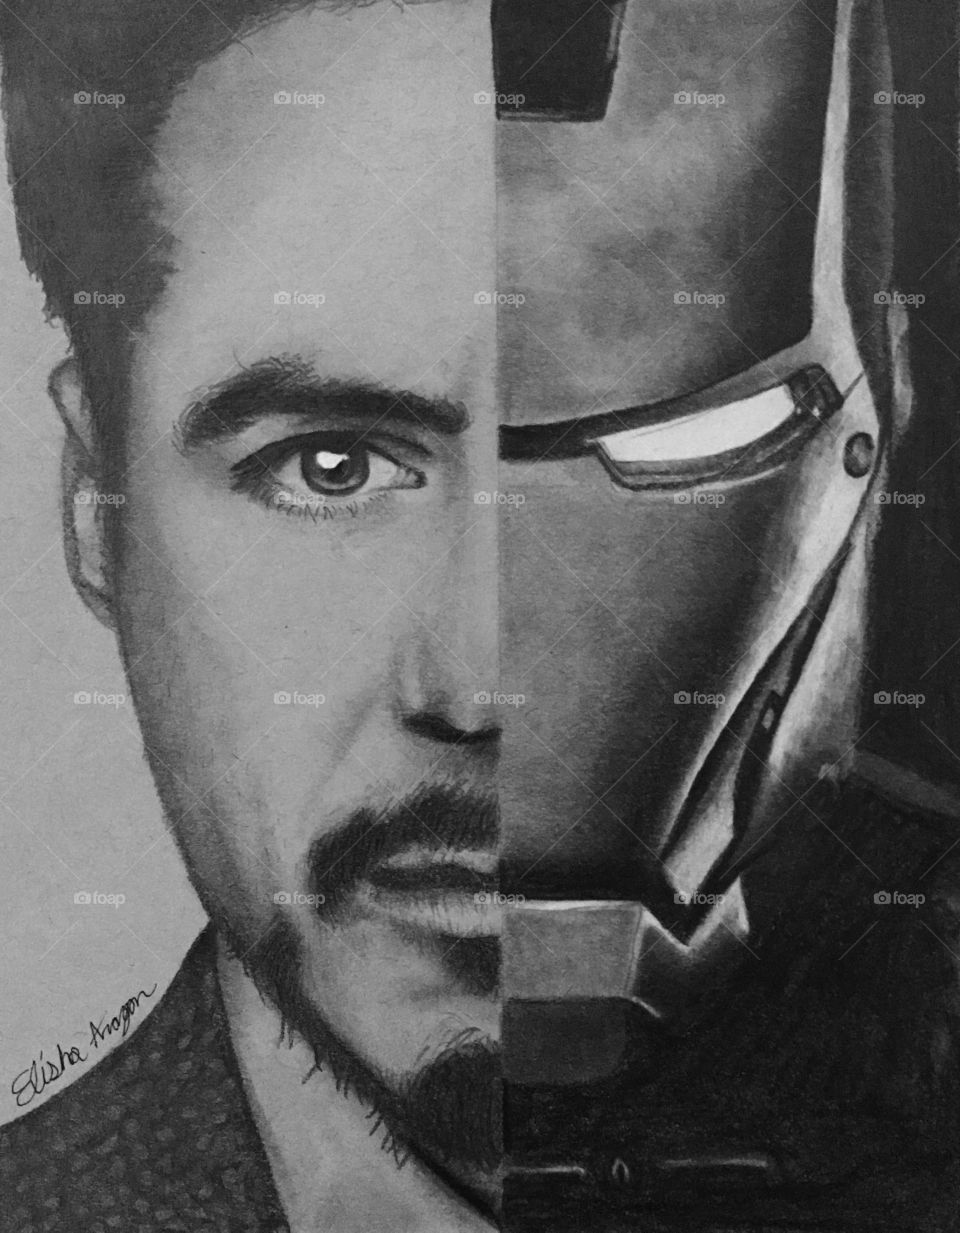 Tony stark/ iron man 